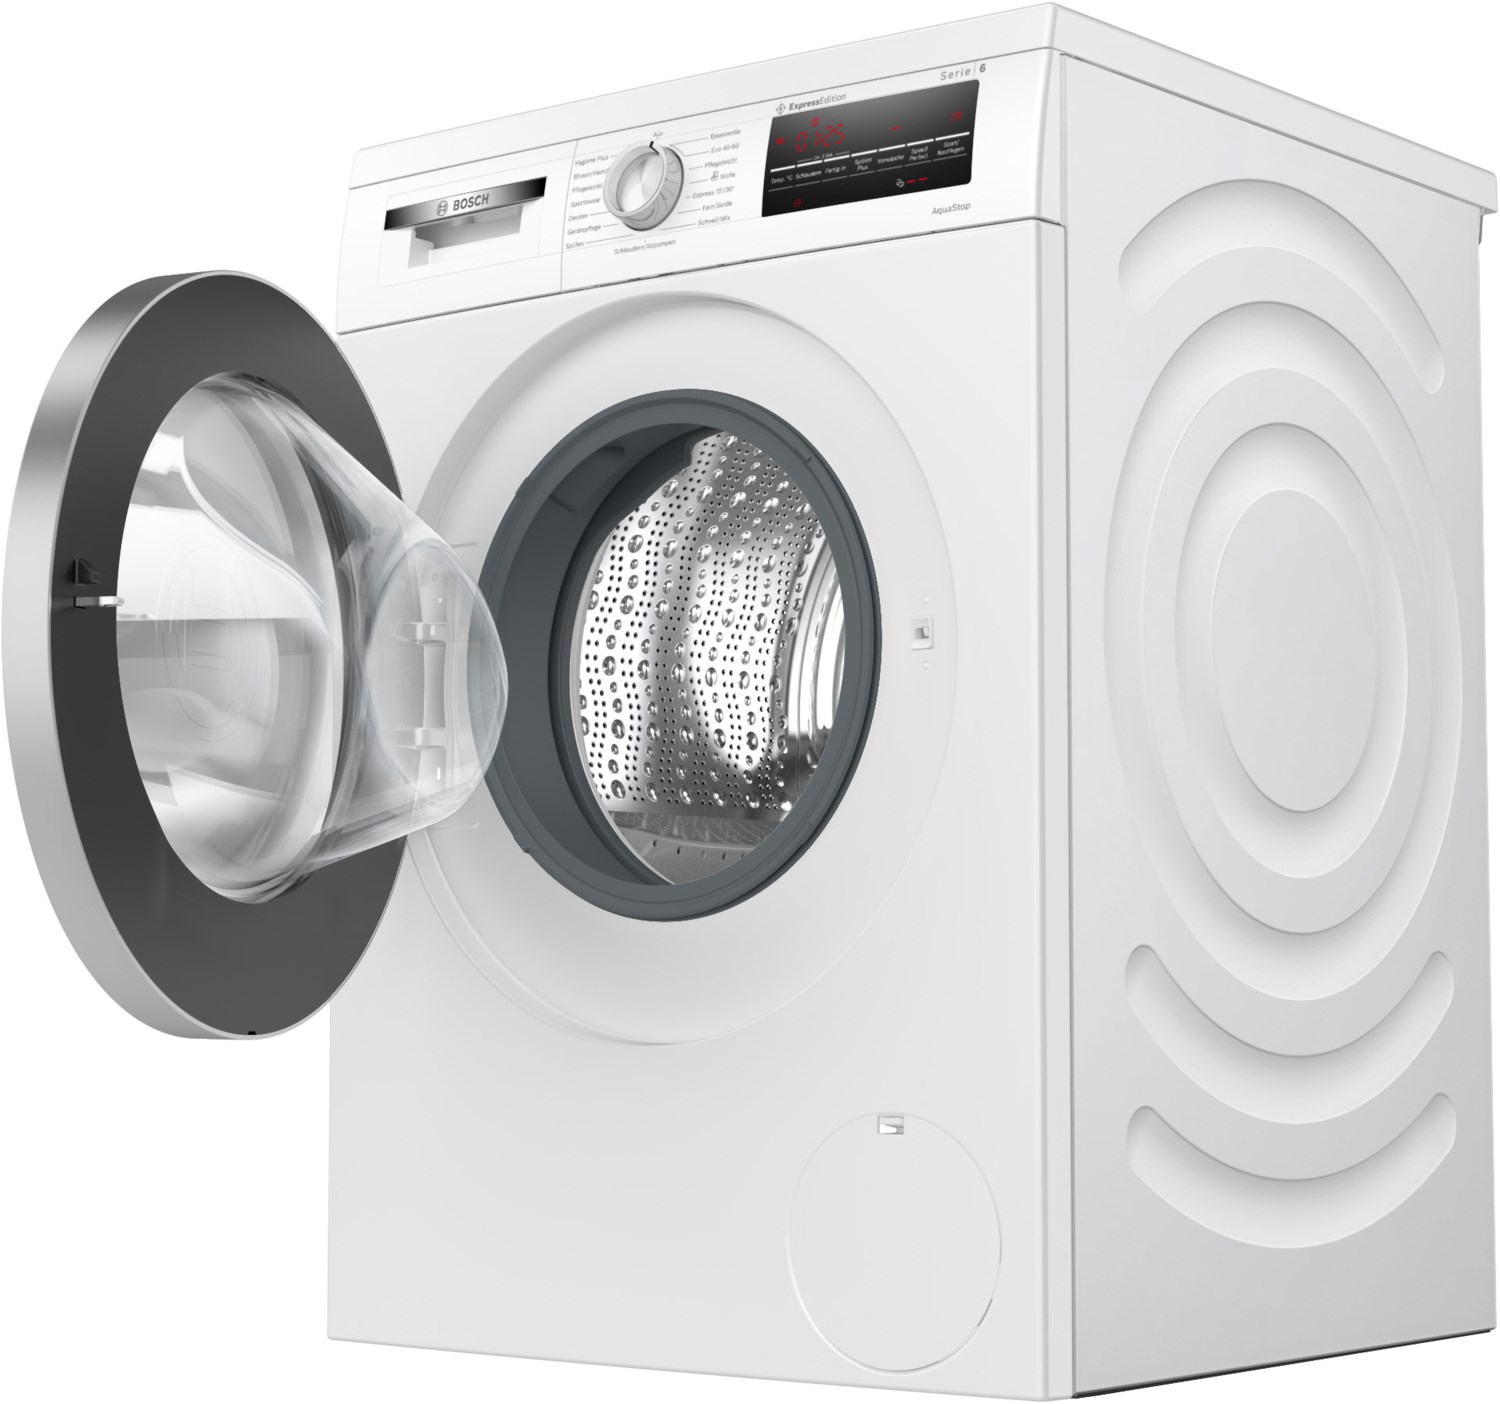 Bosch Serie 6 Waschmaschine 8 kg 1400 U/min